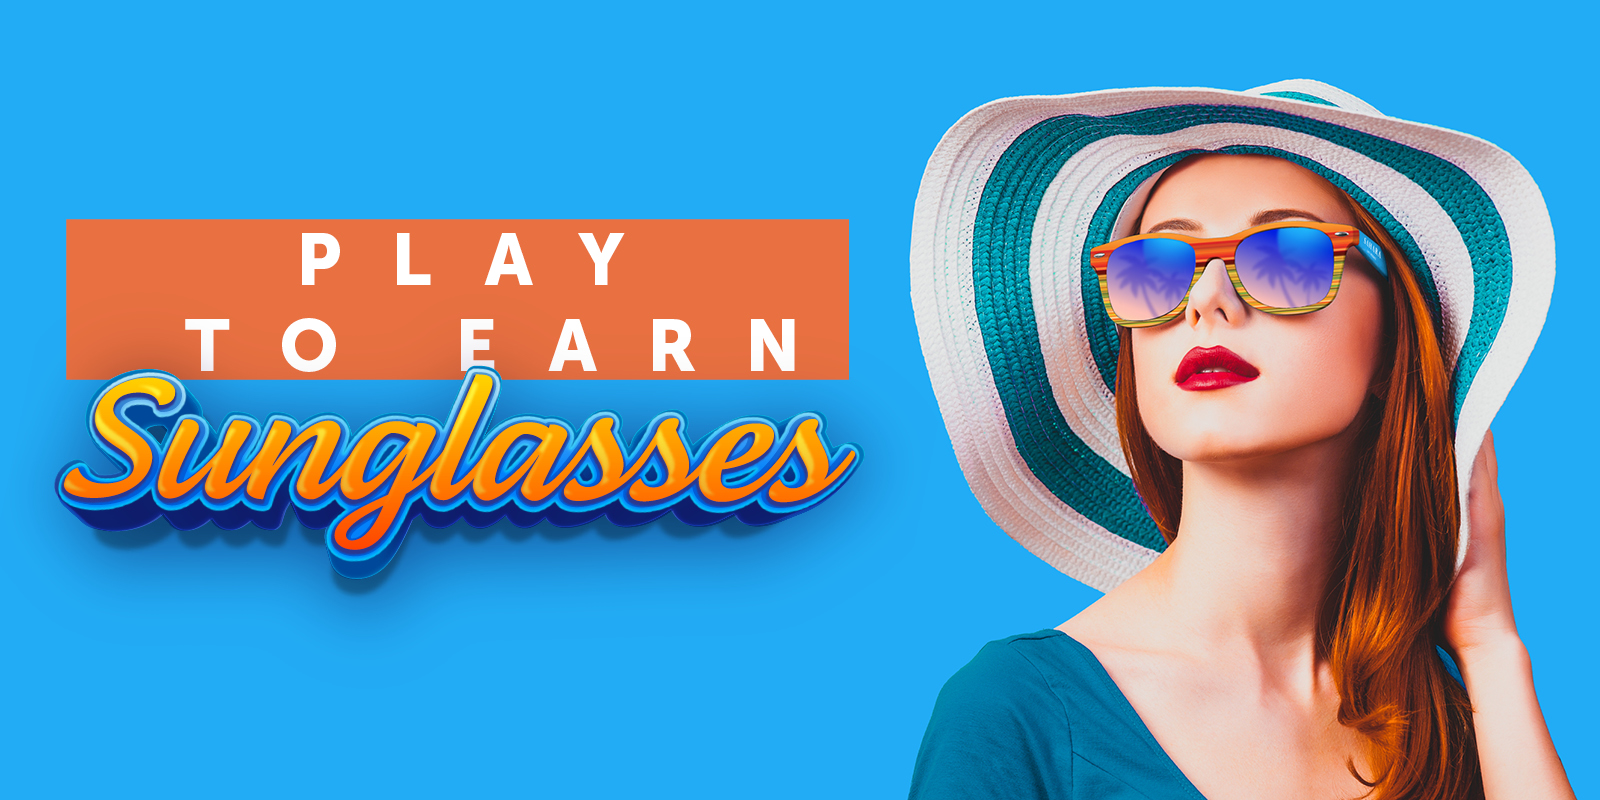 Play To Earn Sunglasses